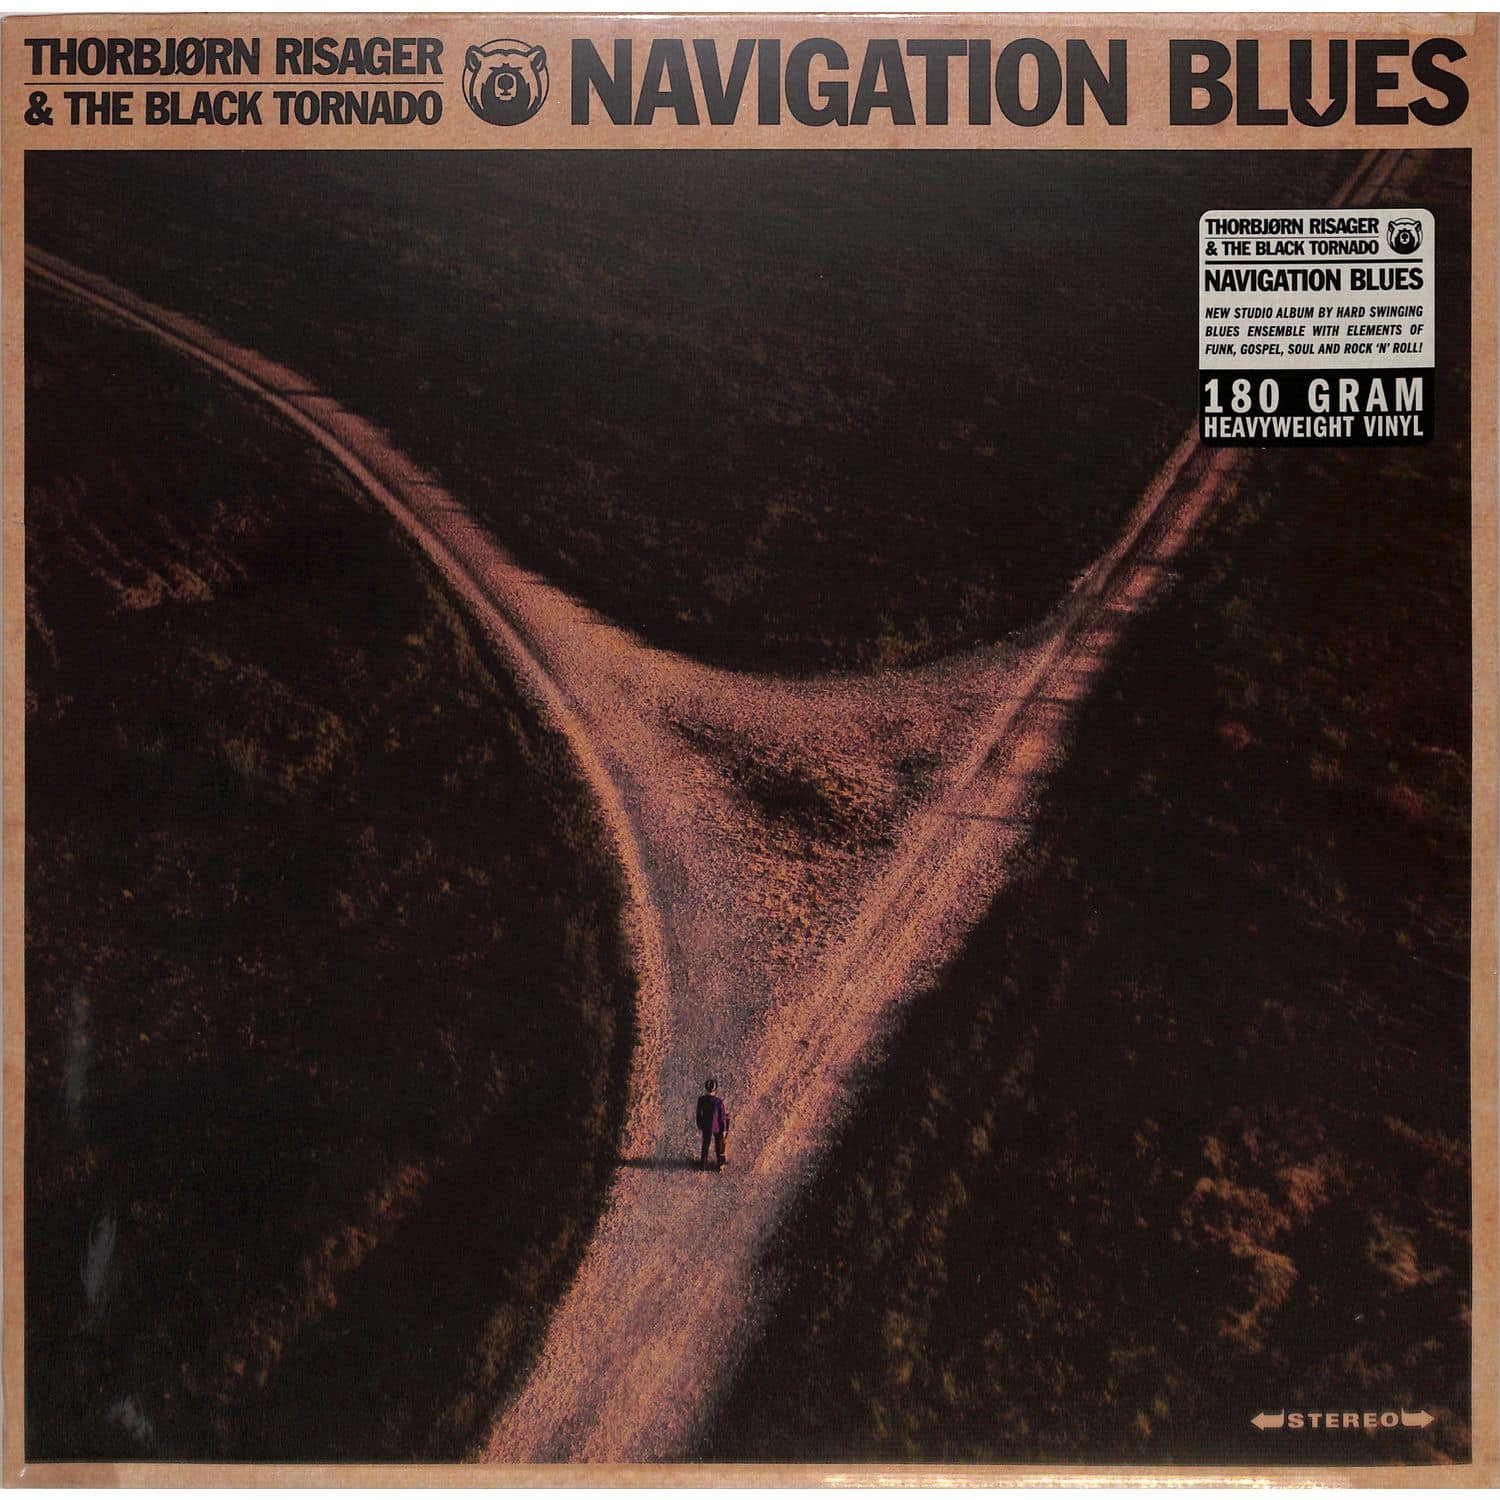 Thorbjorn Risager & The Black Tornado - NAVIGATION BLUES 